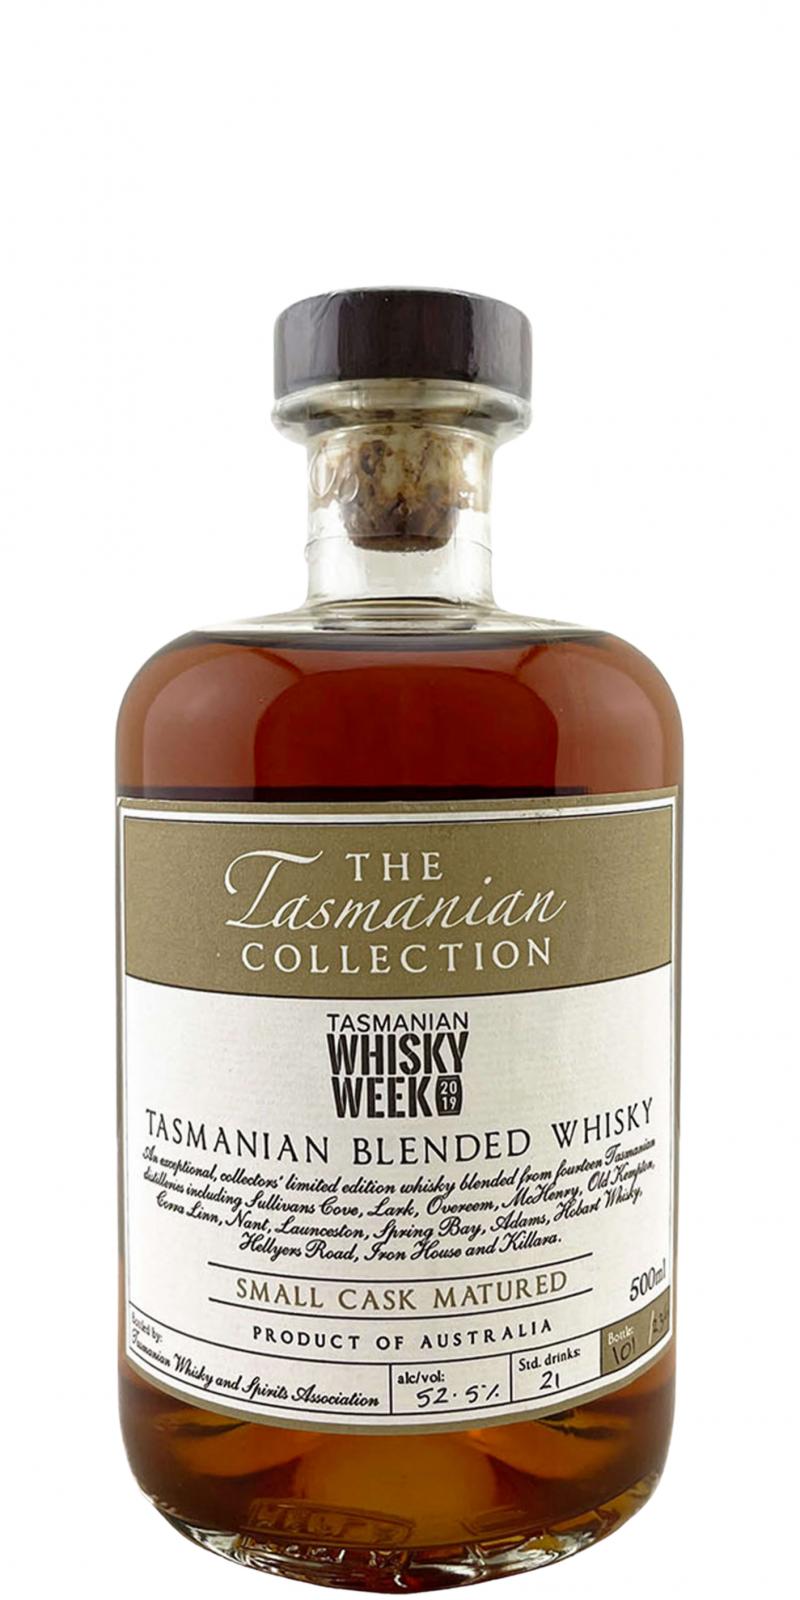 The Tasmanian Collection Tasmanian Blended Whisky